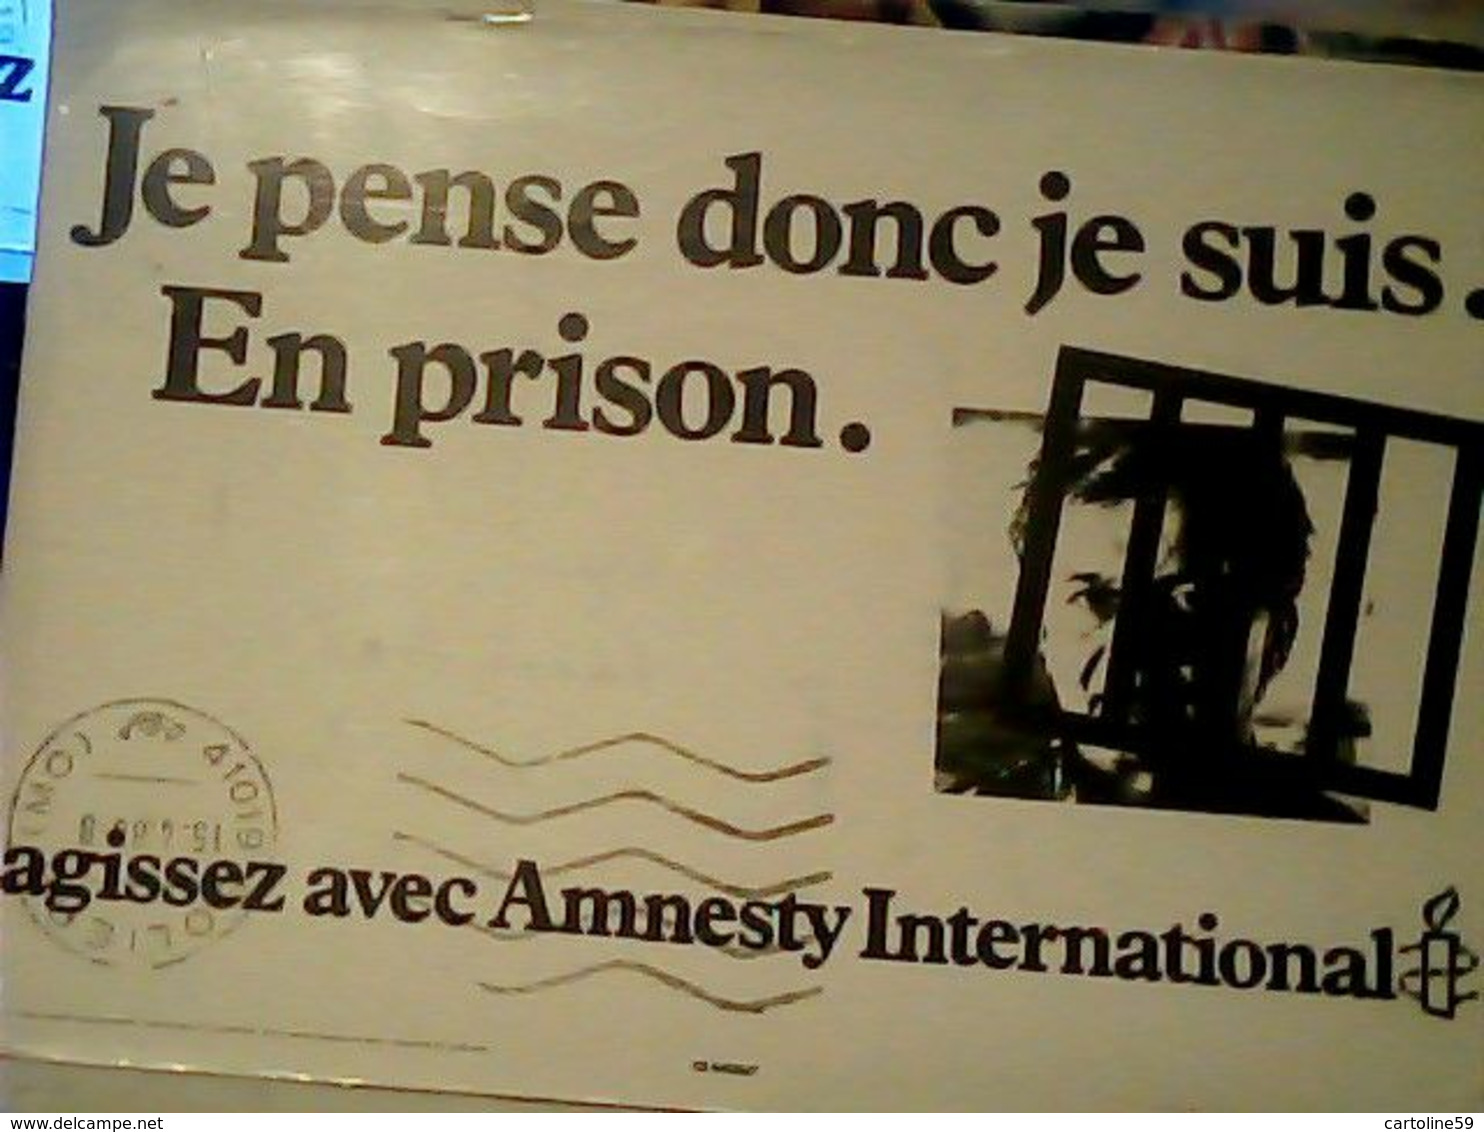 Amnesty International  JE PENSE  JE SUIS EN PRISON  Belgio VB1988  Italia   HR10510 - Prison